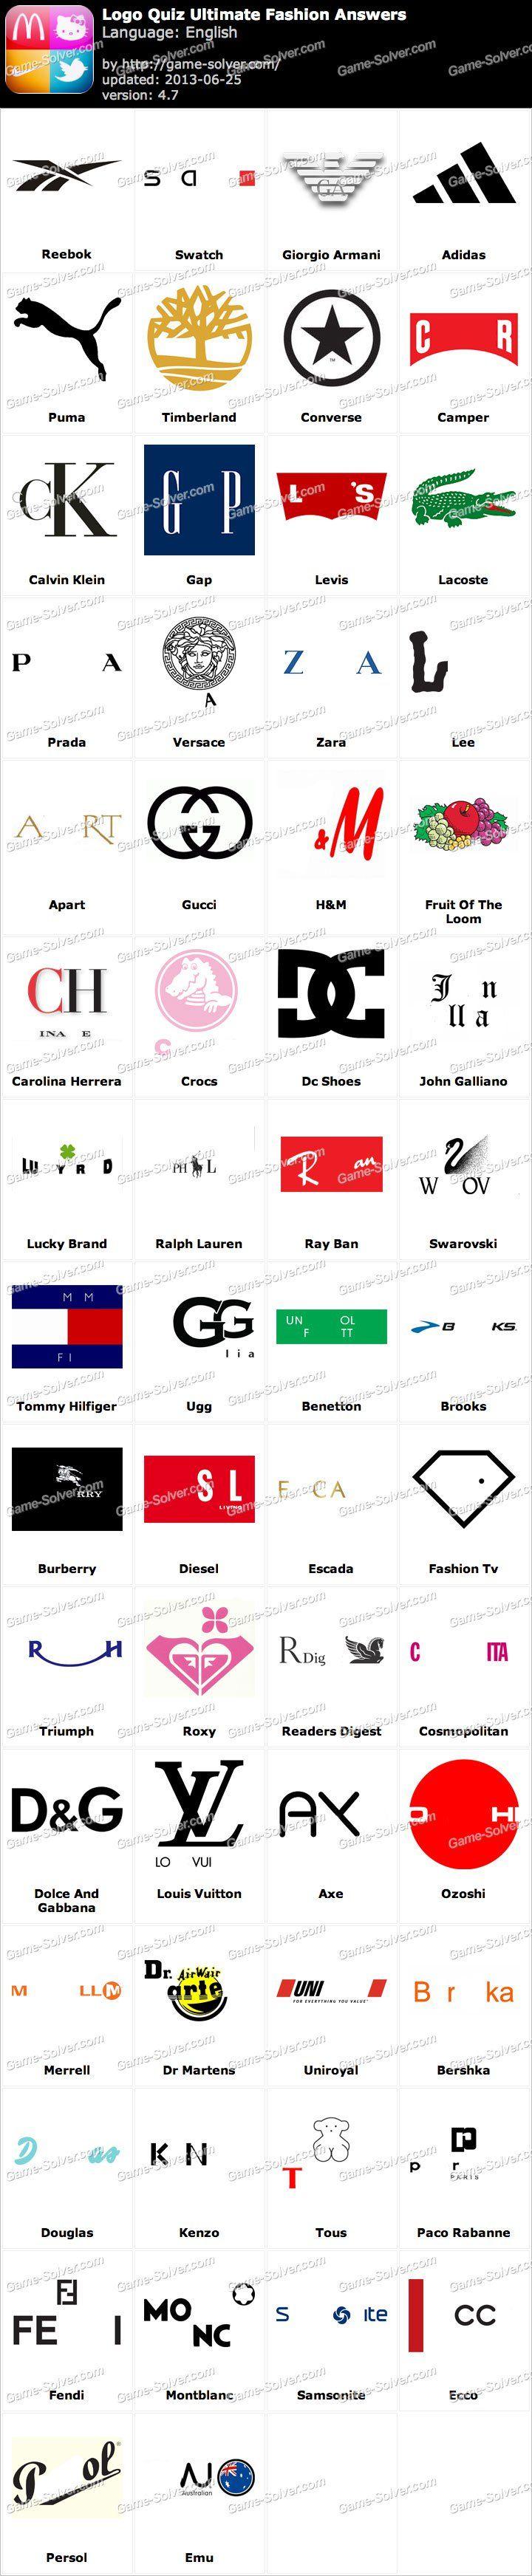 Sport Clothing Brand Logo - Logo Quiz Ultimate Fashion Answers - Game Solver